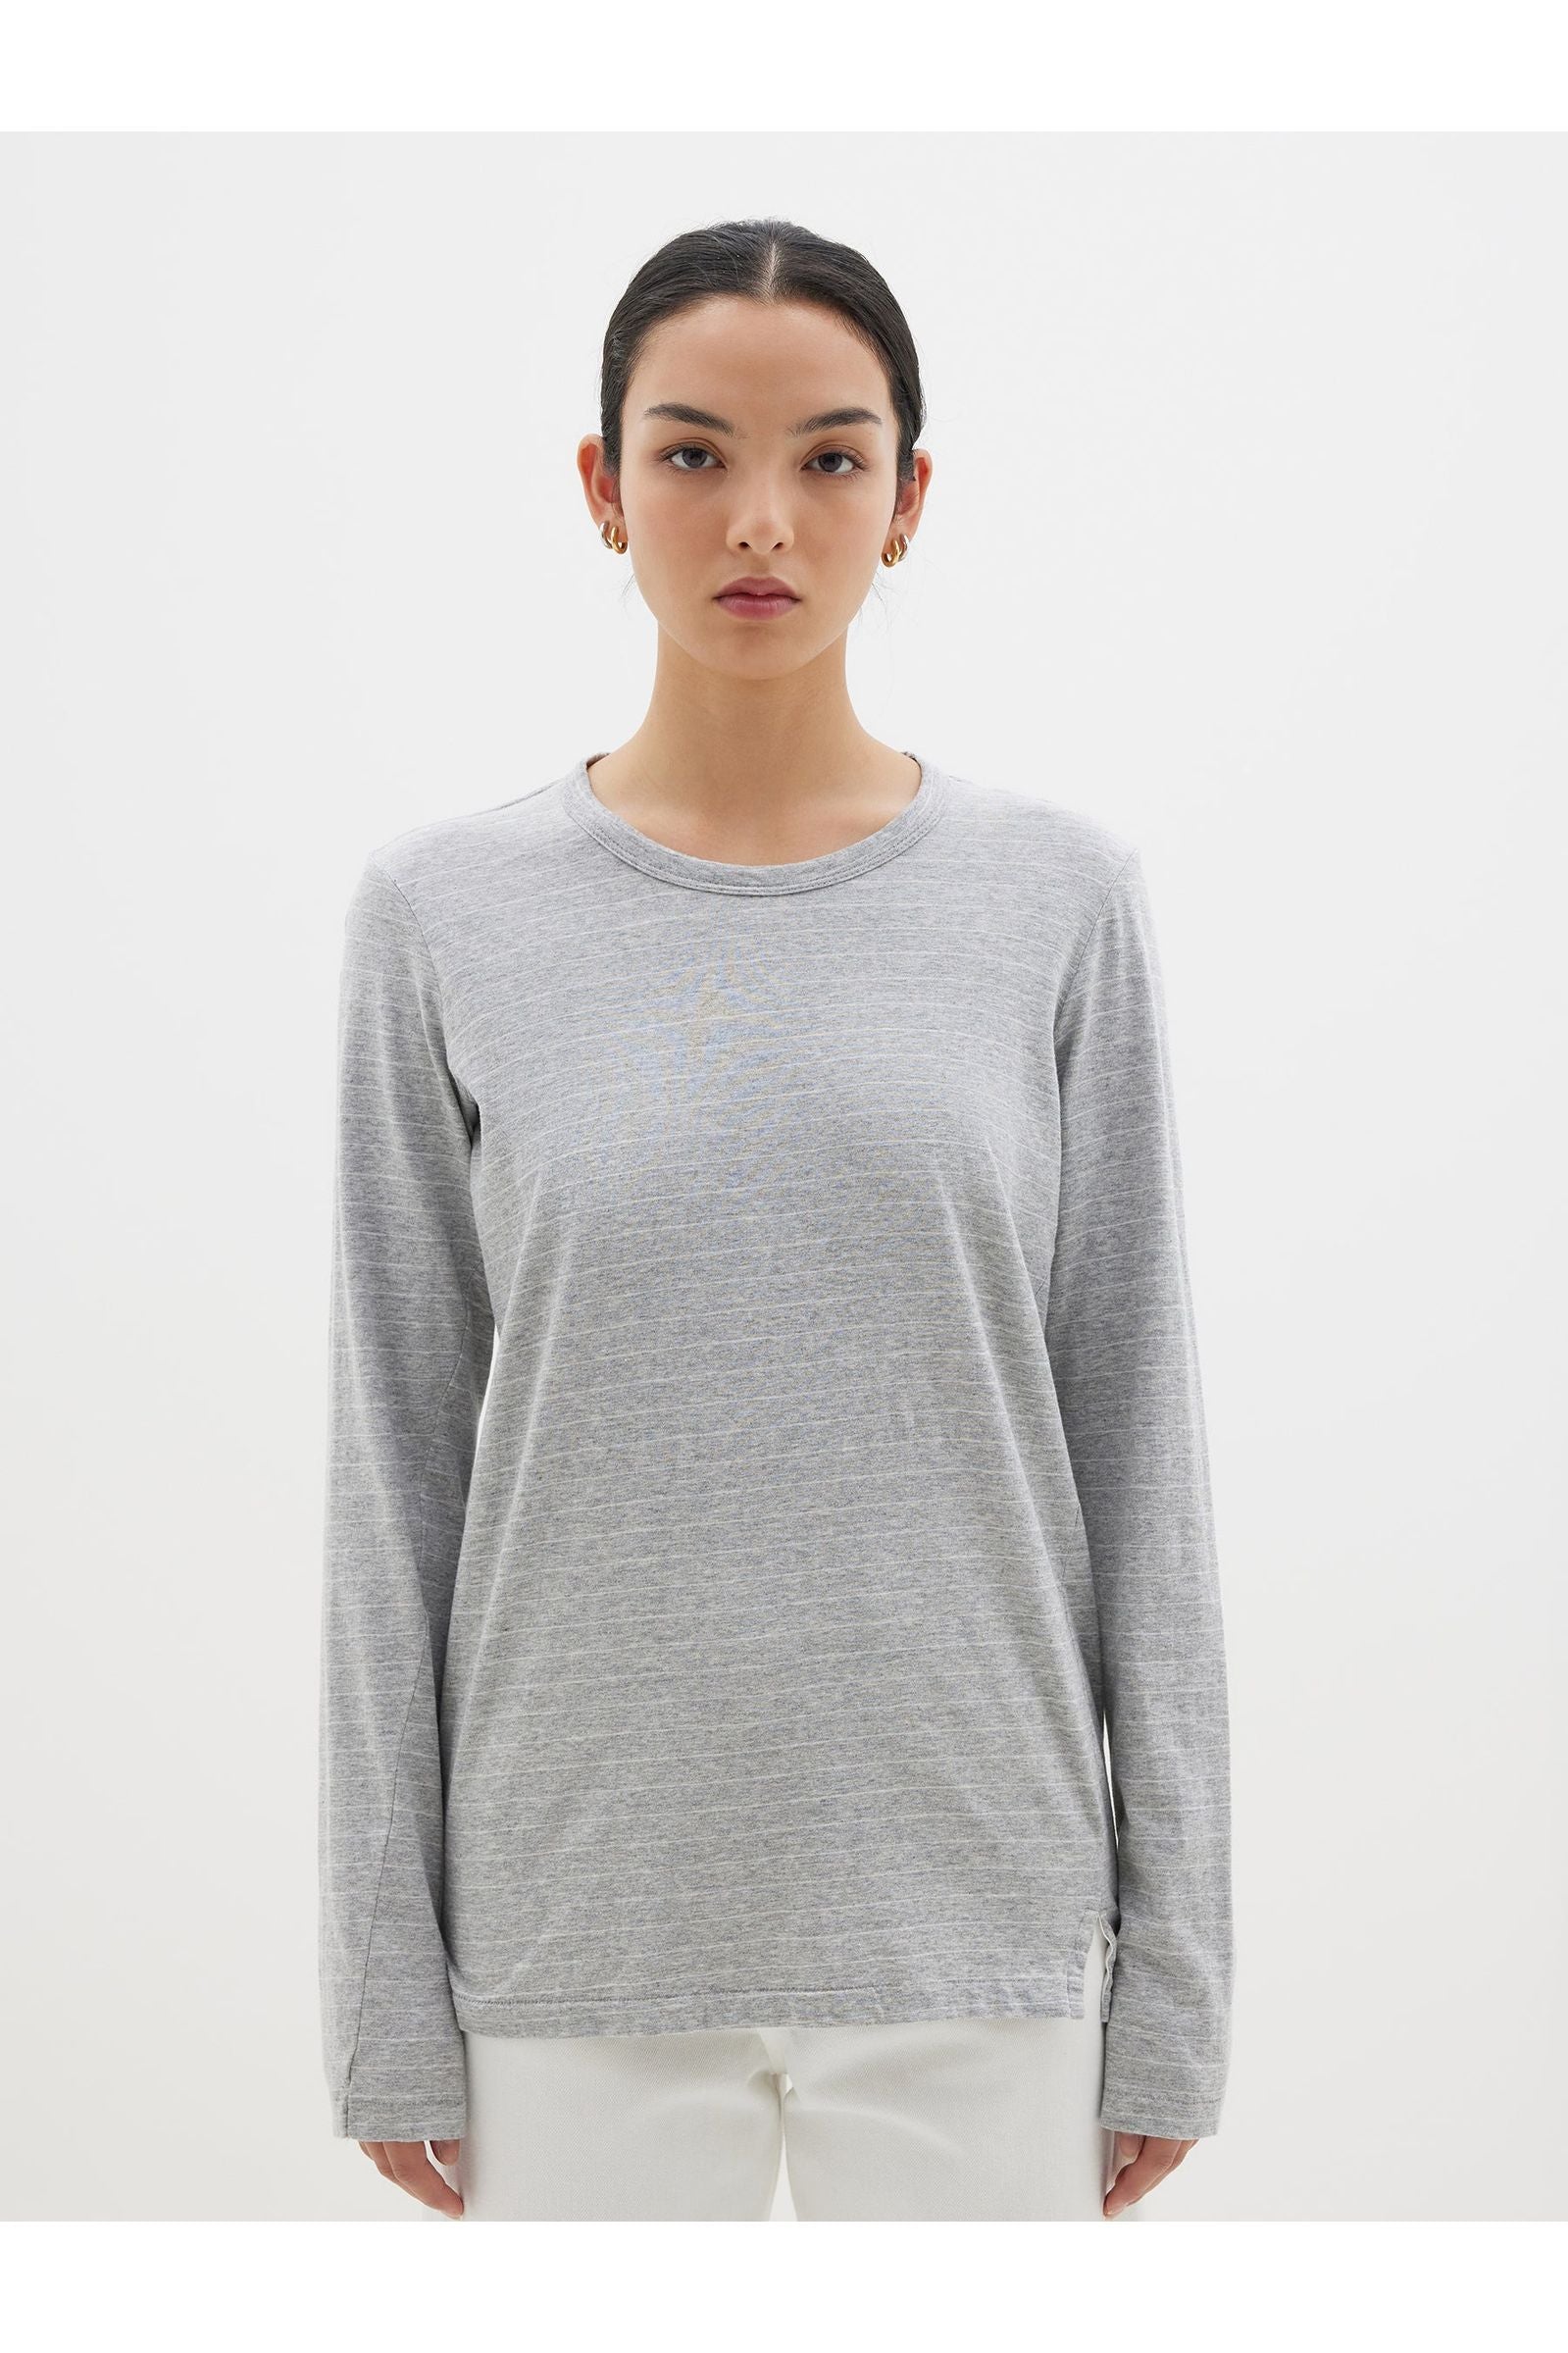 Stripe Regular Longsleeve T-shirt in Grey Marl/Undyed